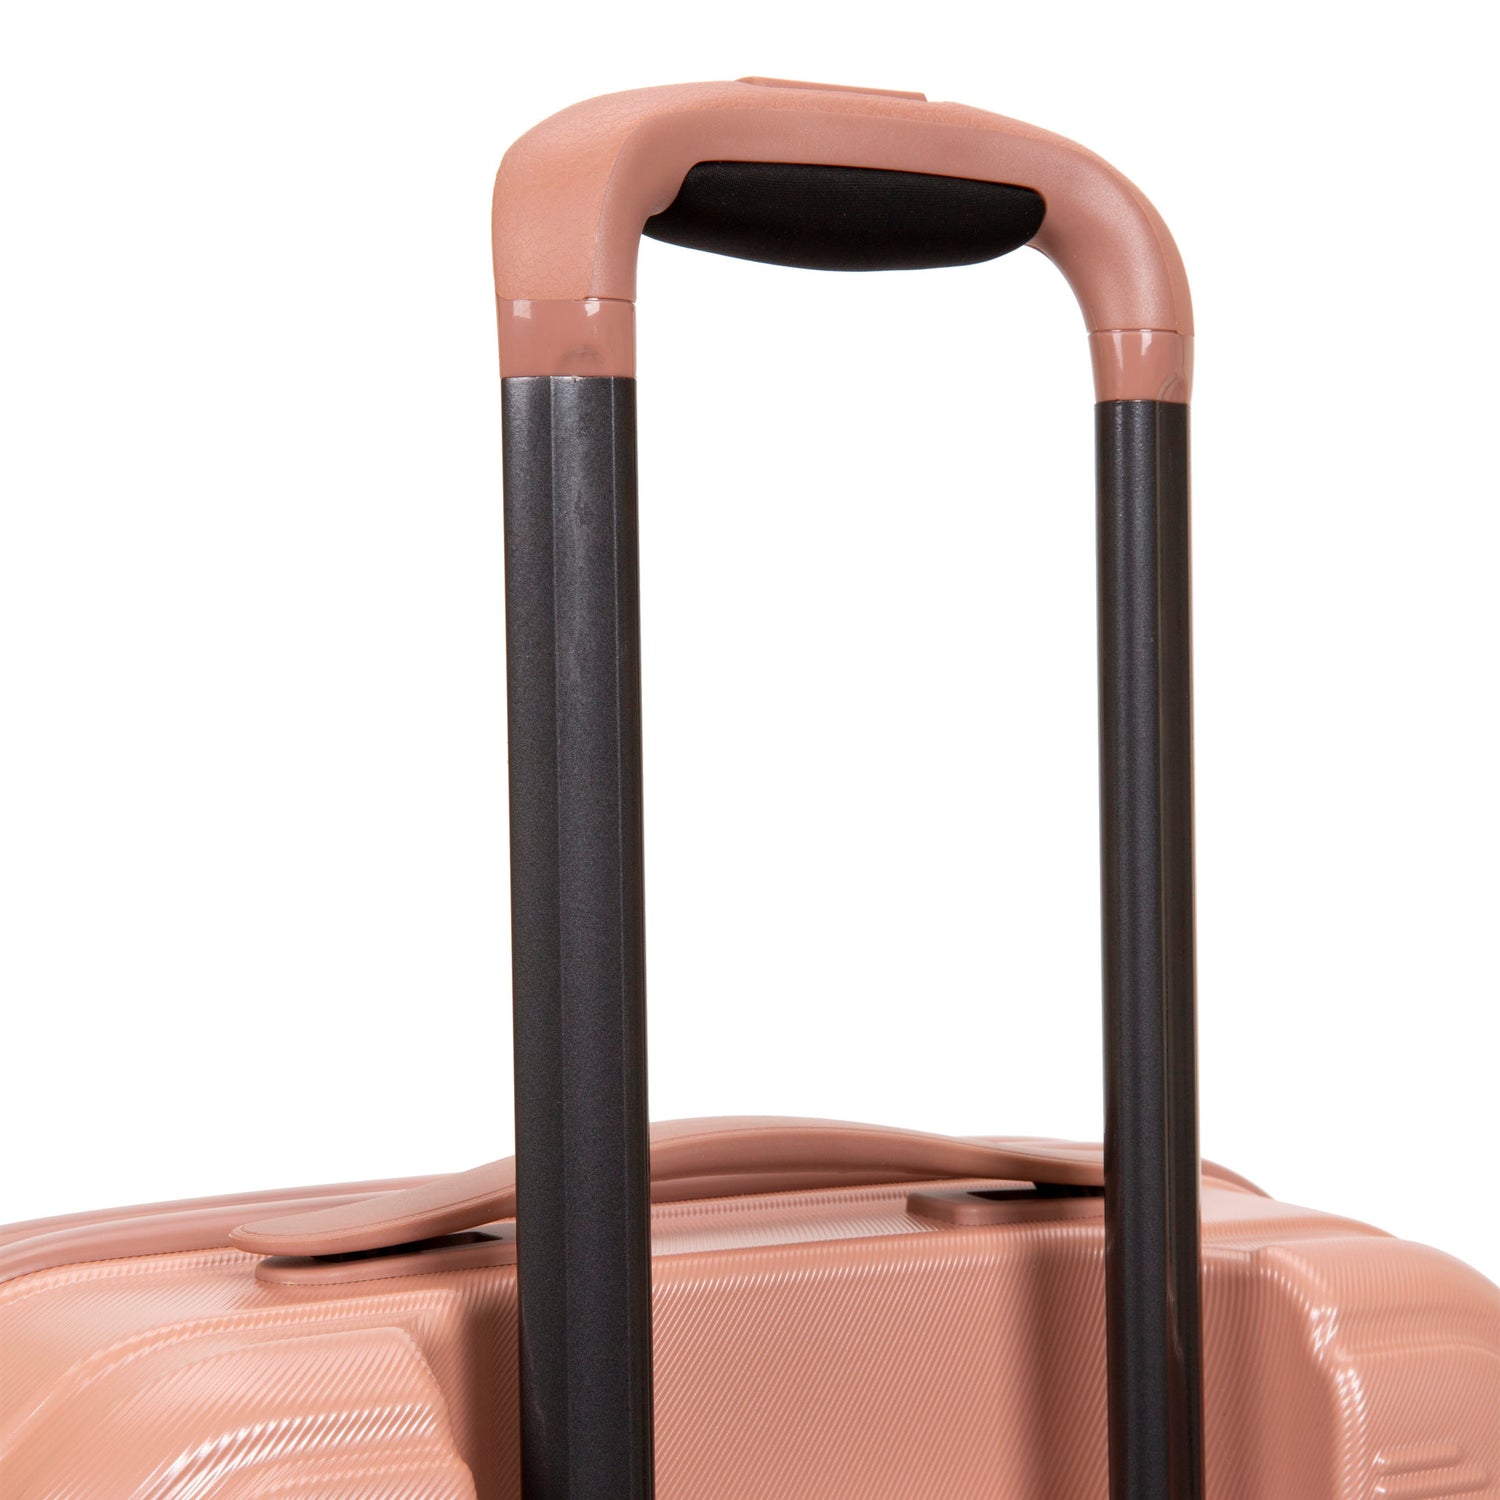 Kenya Hardside 21,5" Carry-On Luggage -  - 

        Samsonite
      
